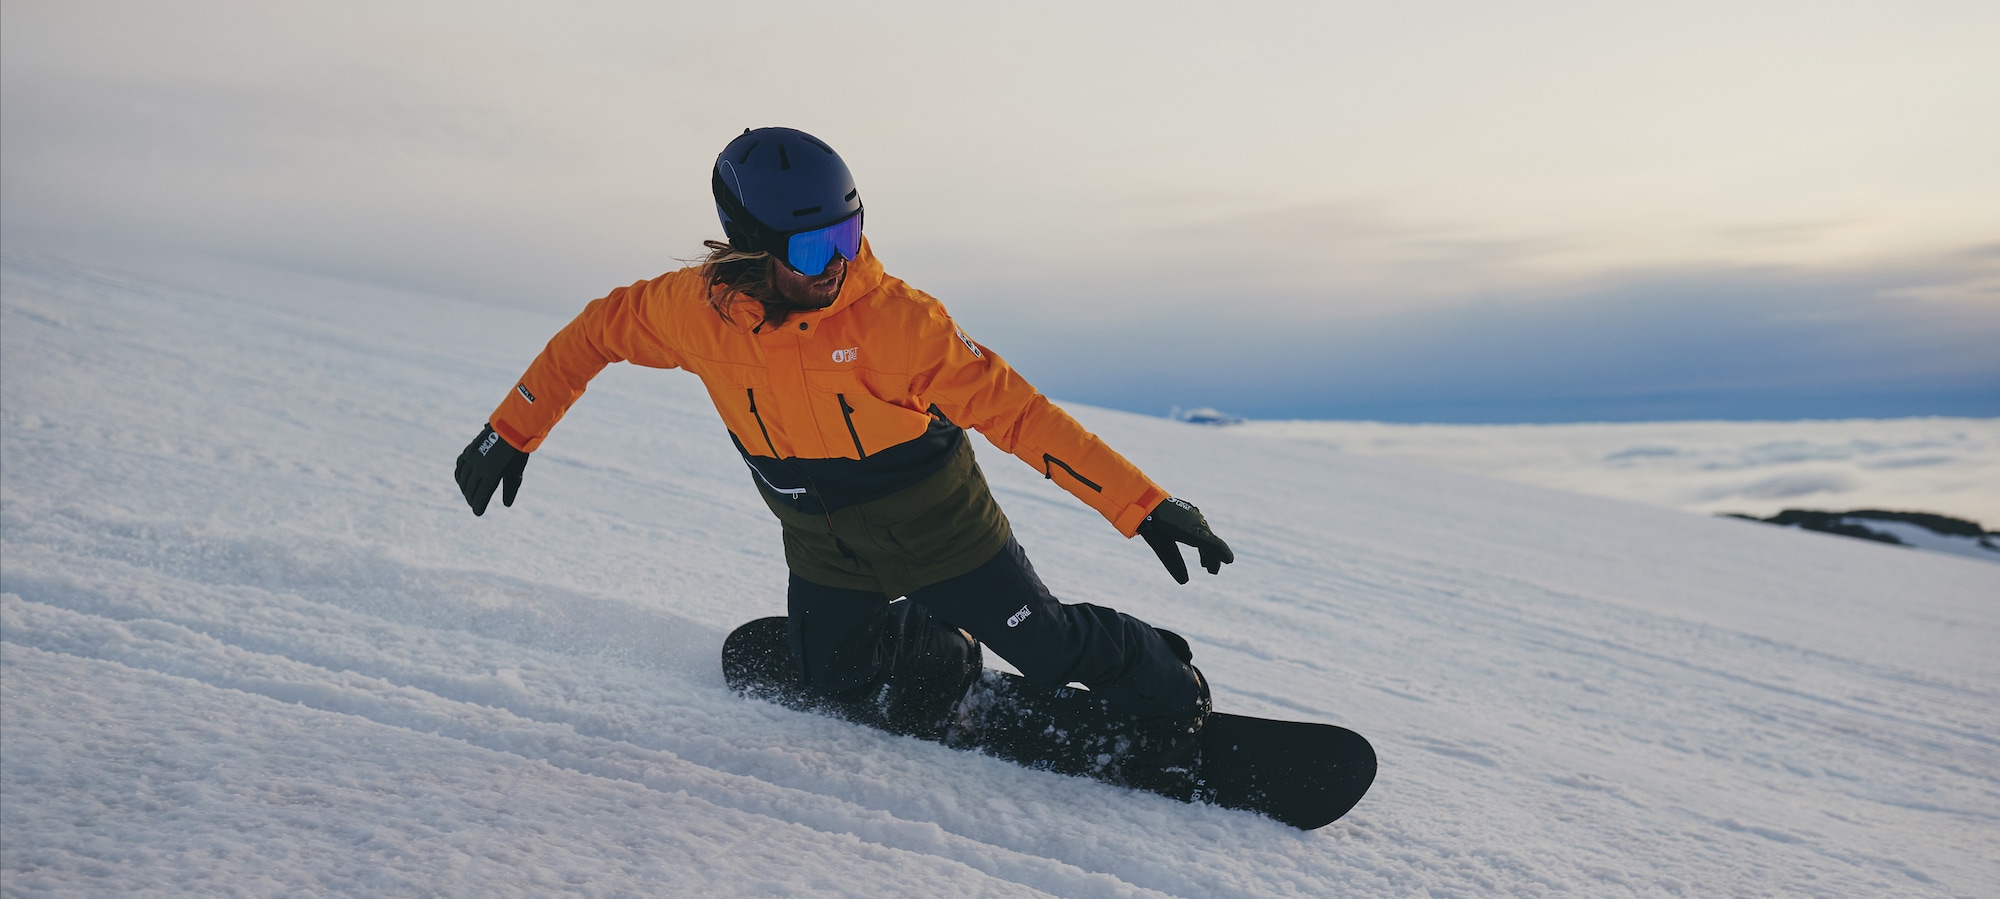 V teple a bezpečí počas celej sezóny Snowboardové bundy